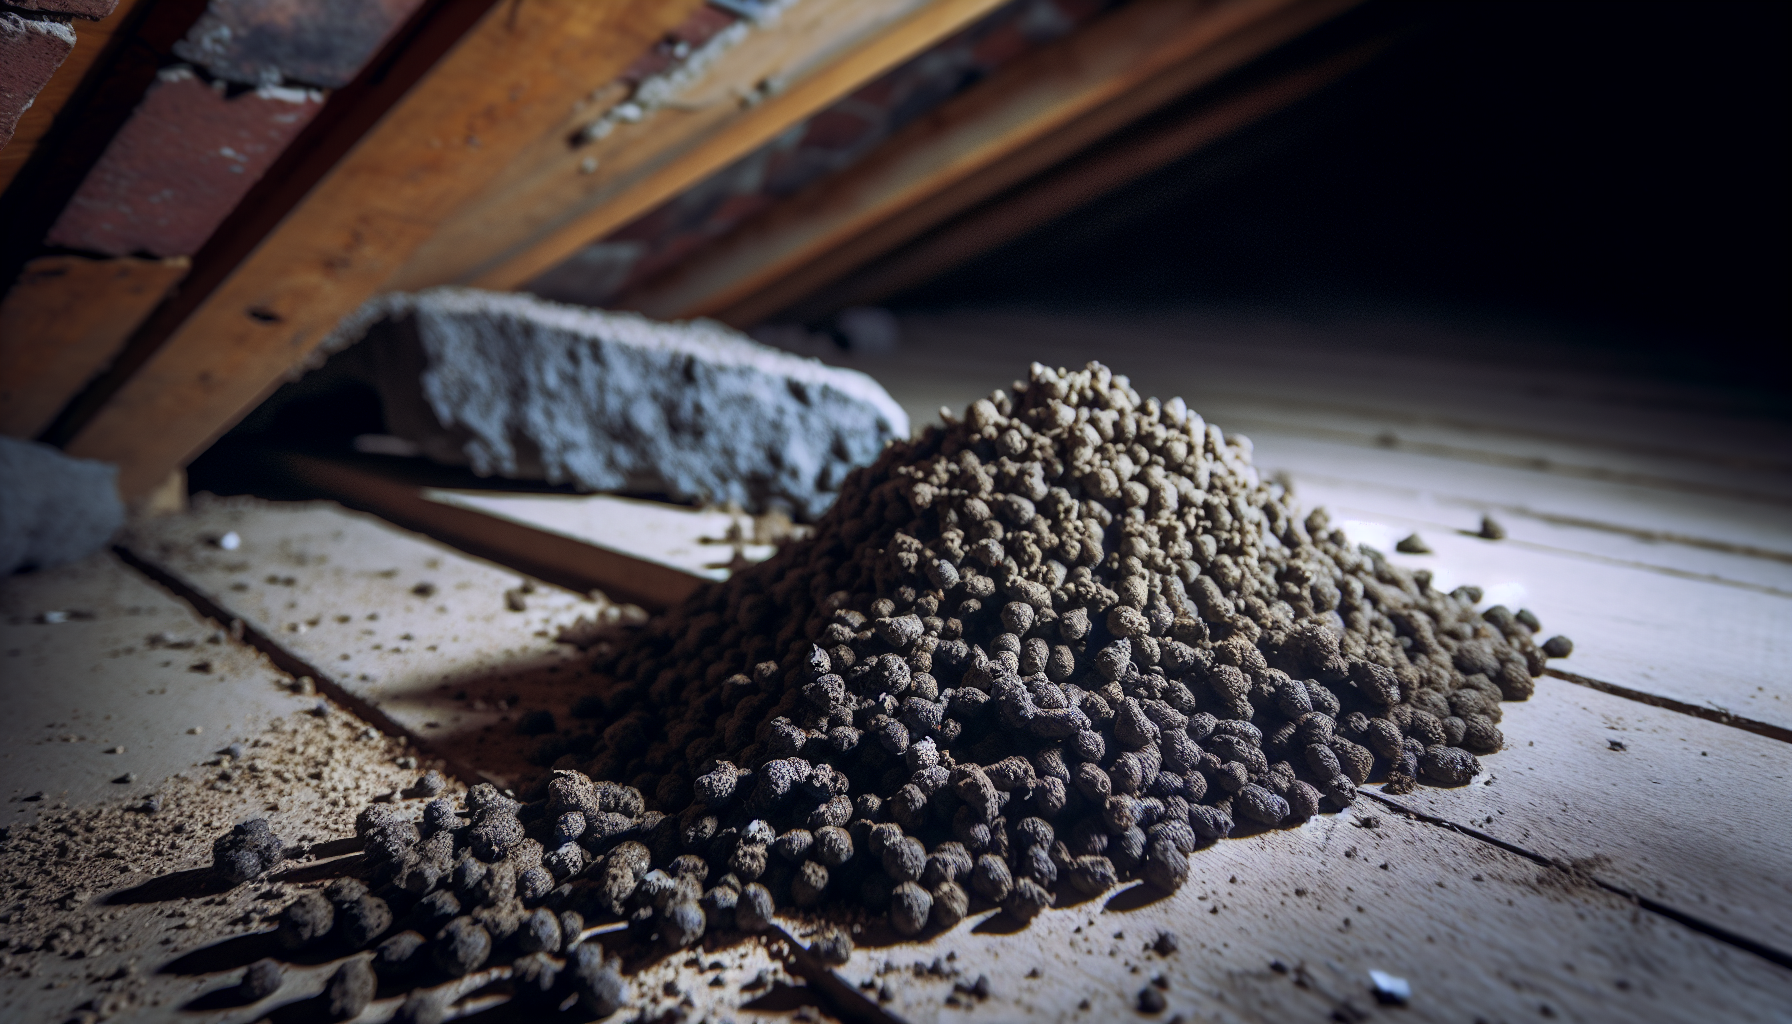 Pile of bat guano in an attic